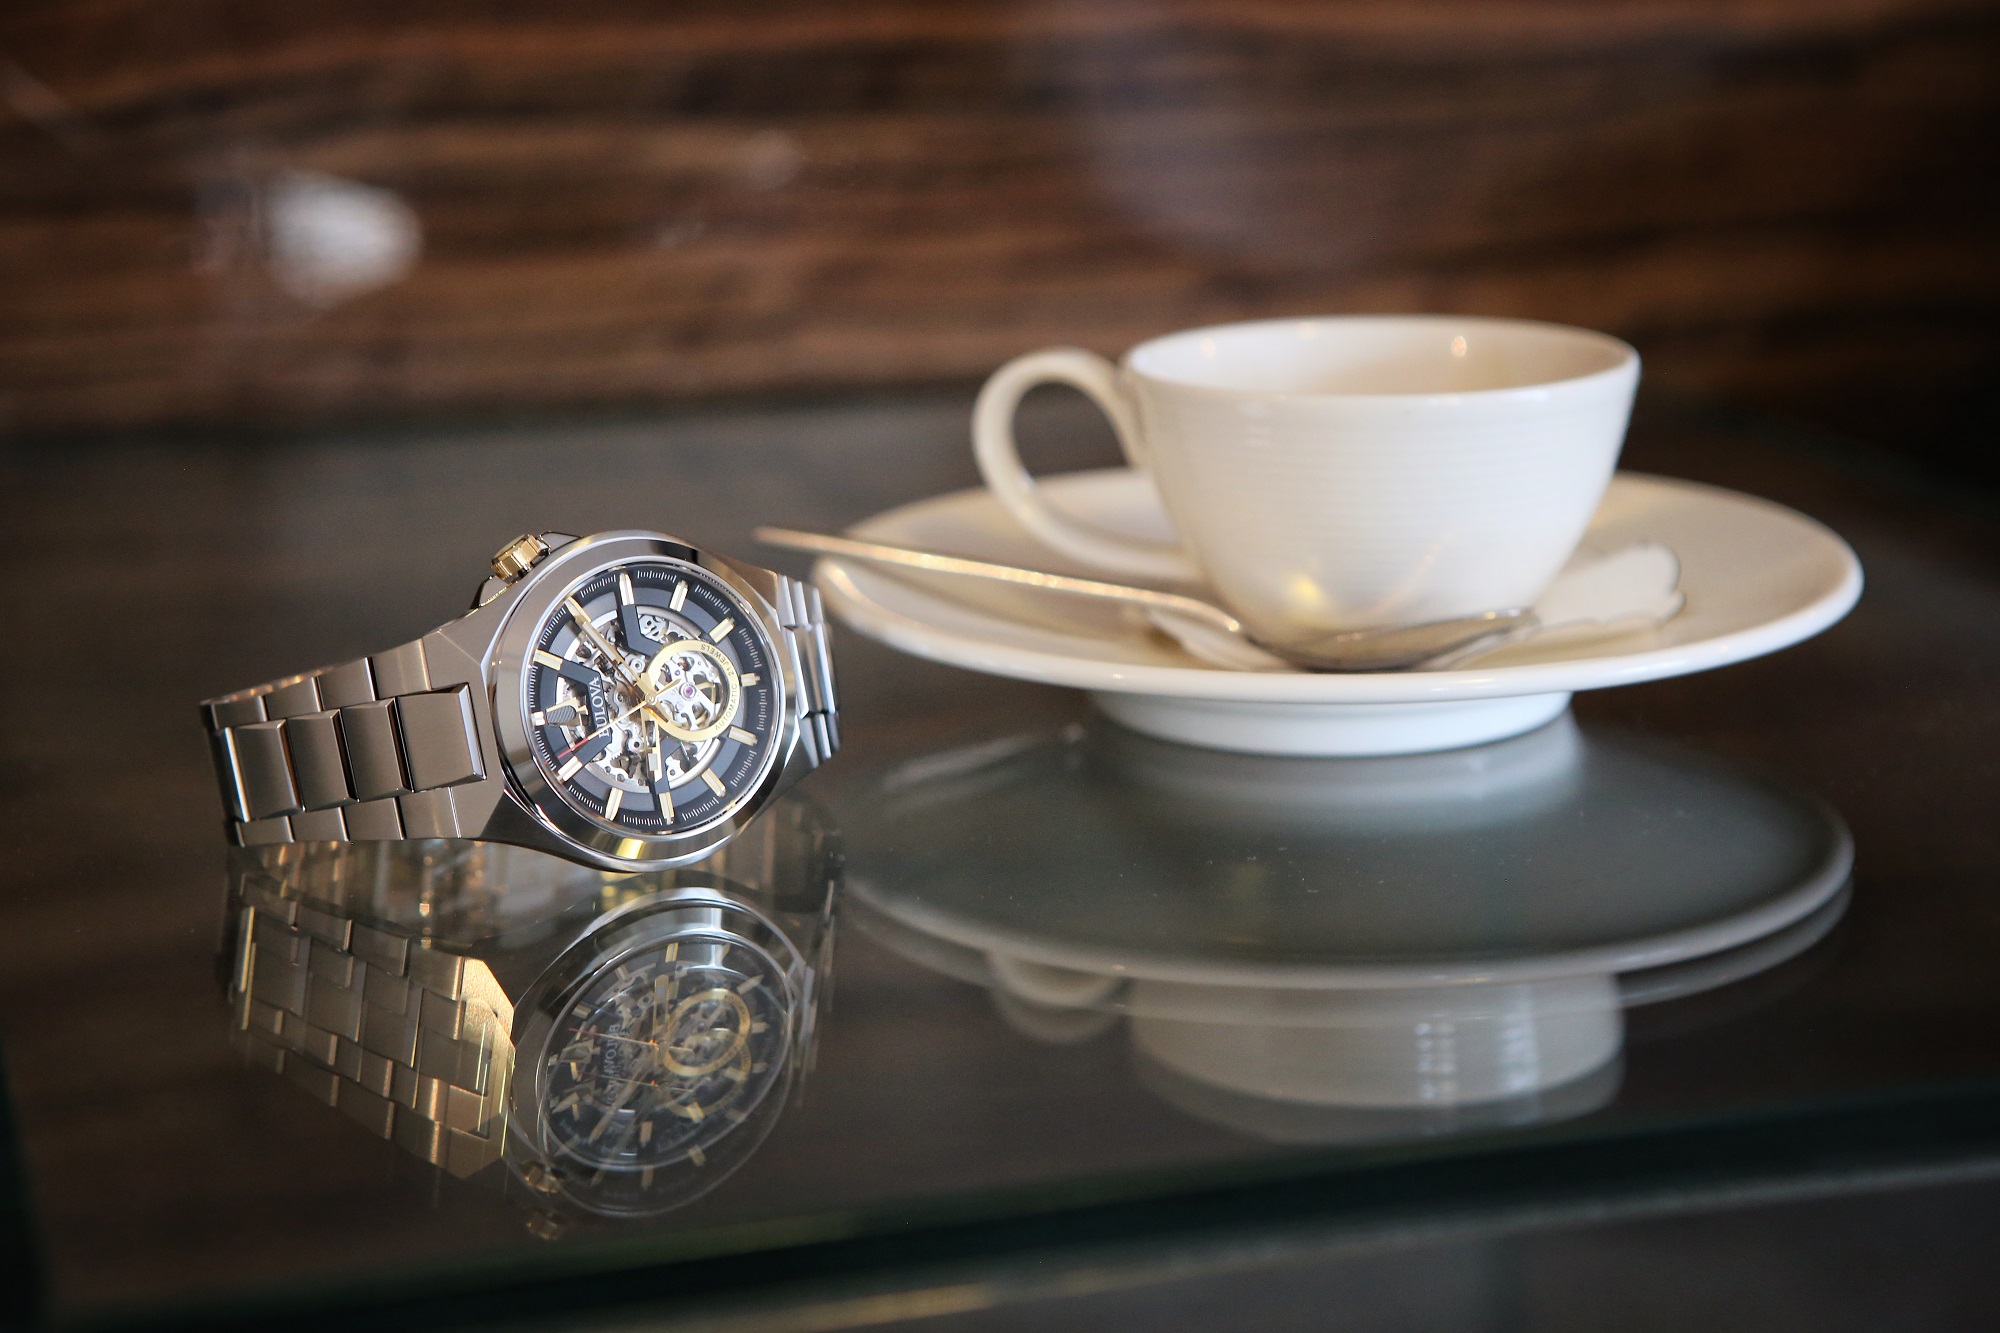 Srebrny zegarek na stole